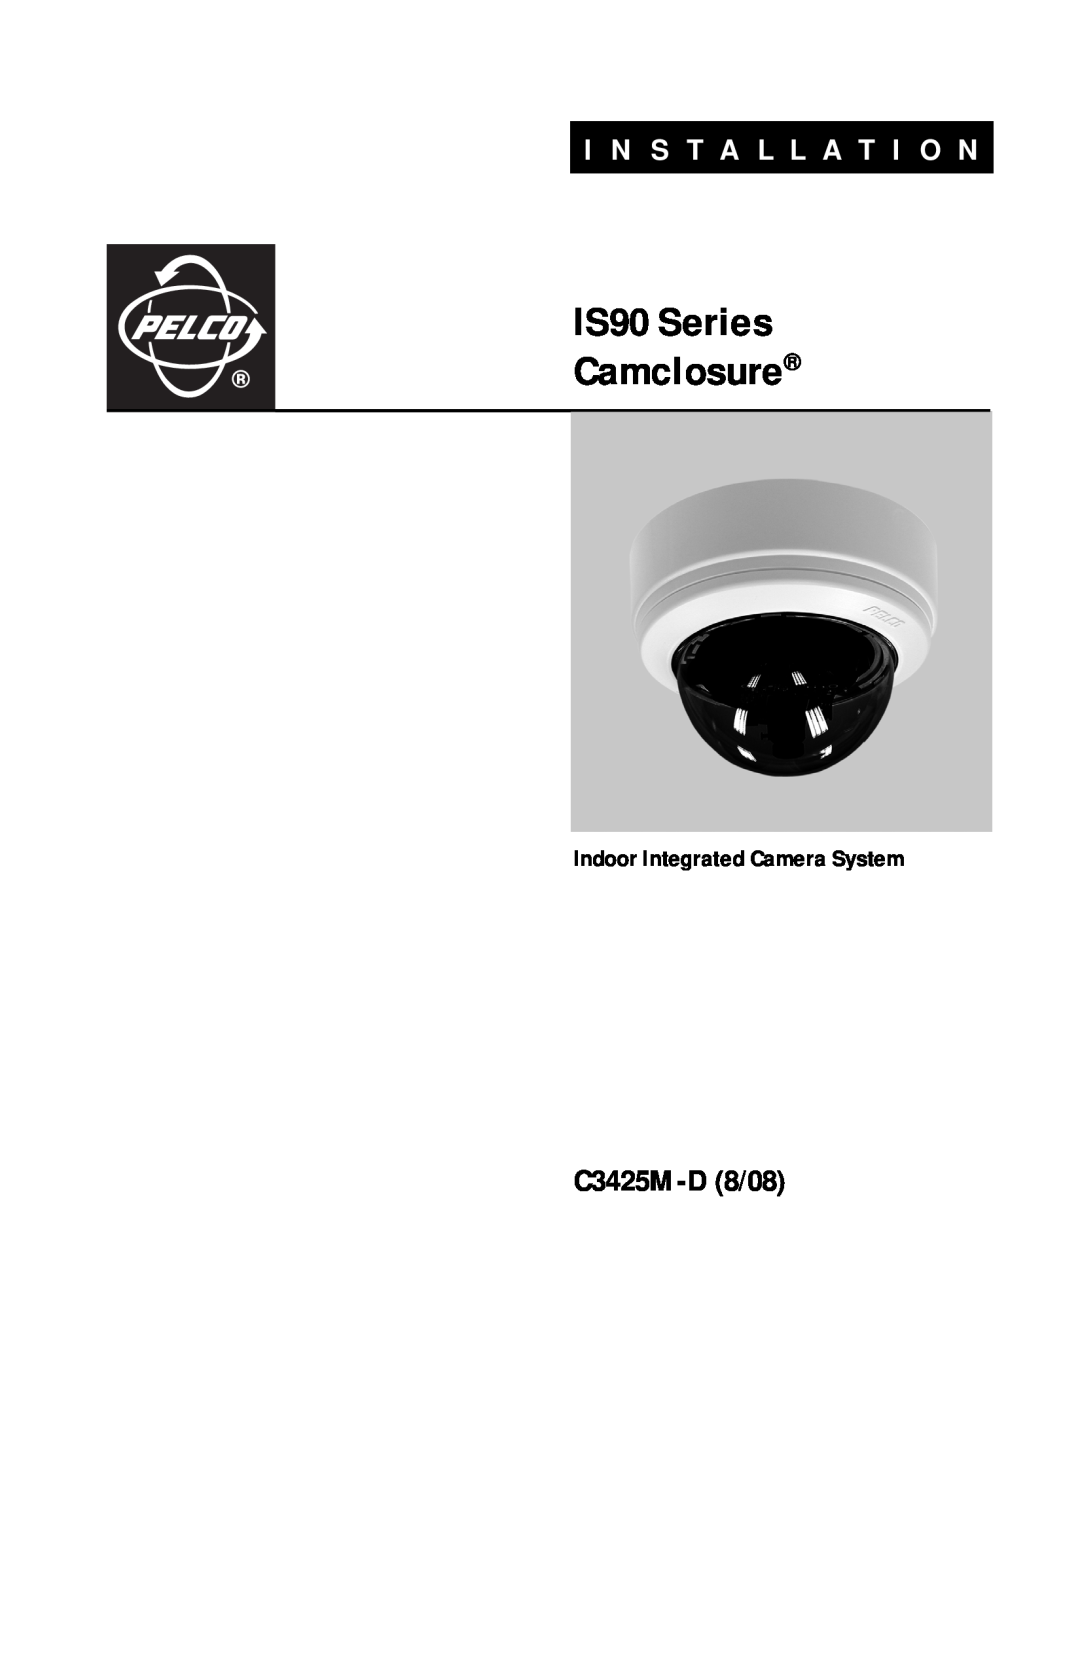 Pelco manual IS90 Series Camclosure, C3425M-D8/08, Indoor Integrated Camera System, I N S T A L L A T I O N 